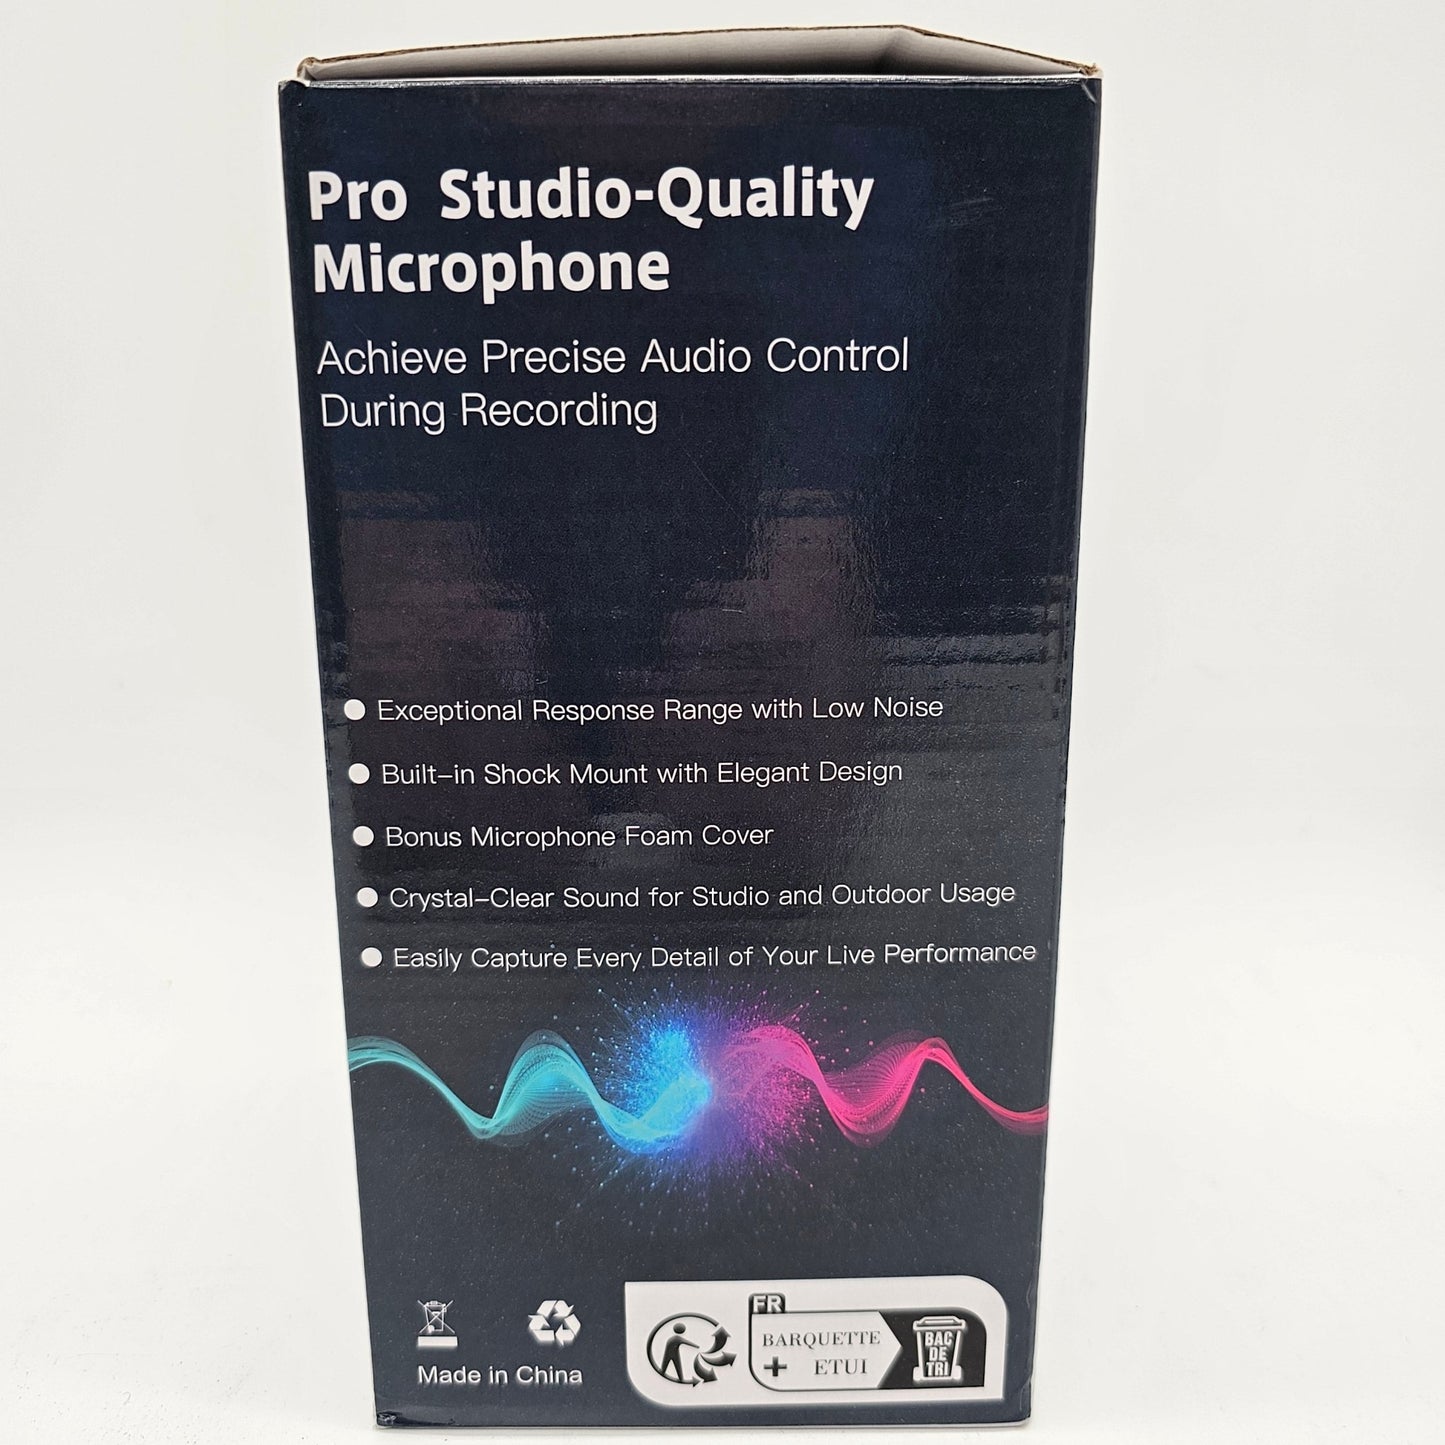 Professional Studio Microphone ZealSound - DQ Distribution